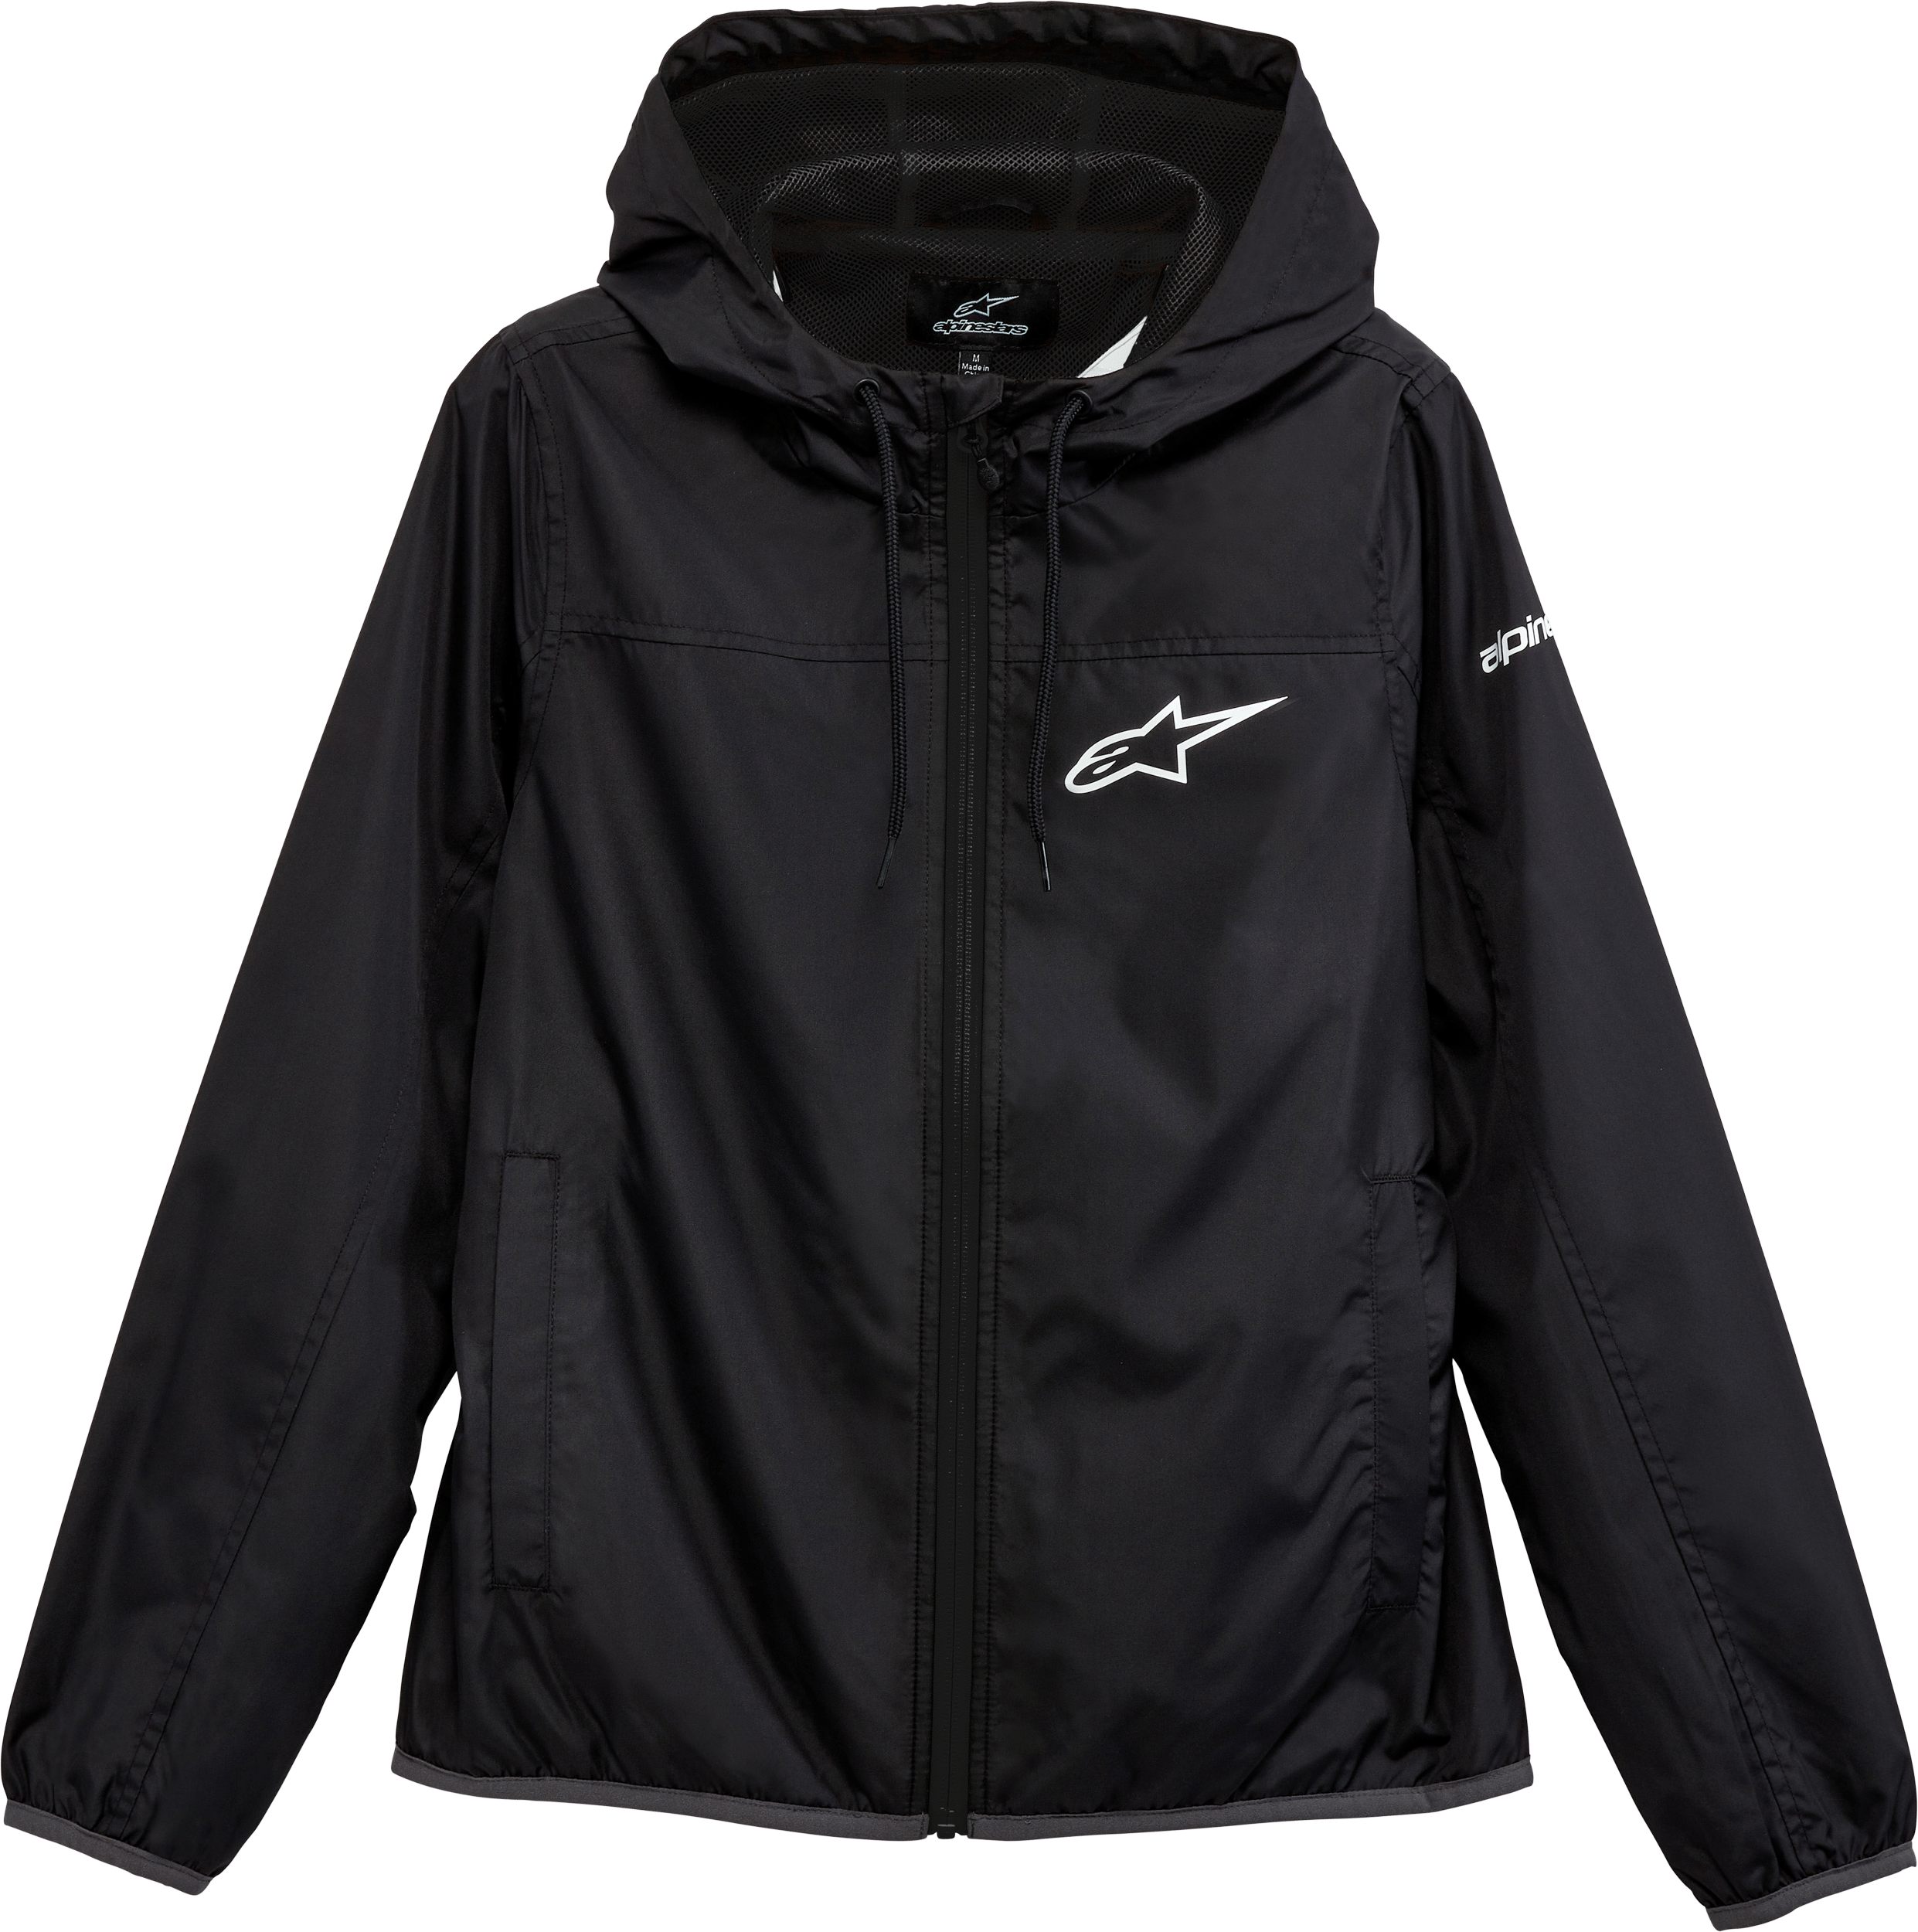 Western Powersports Jacket Black / 2X Women's Treq Windbreaker By Alpinestars 1232-11910-10-XXL